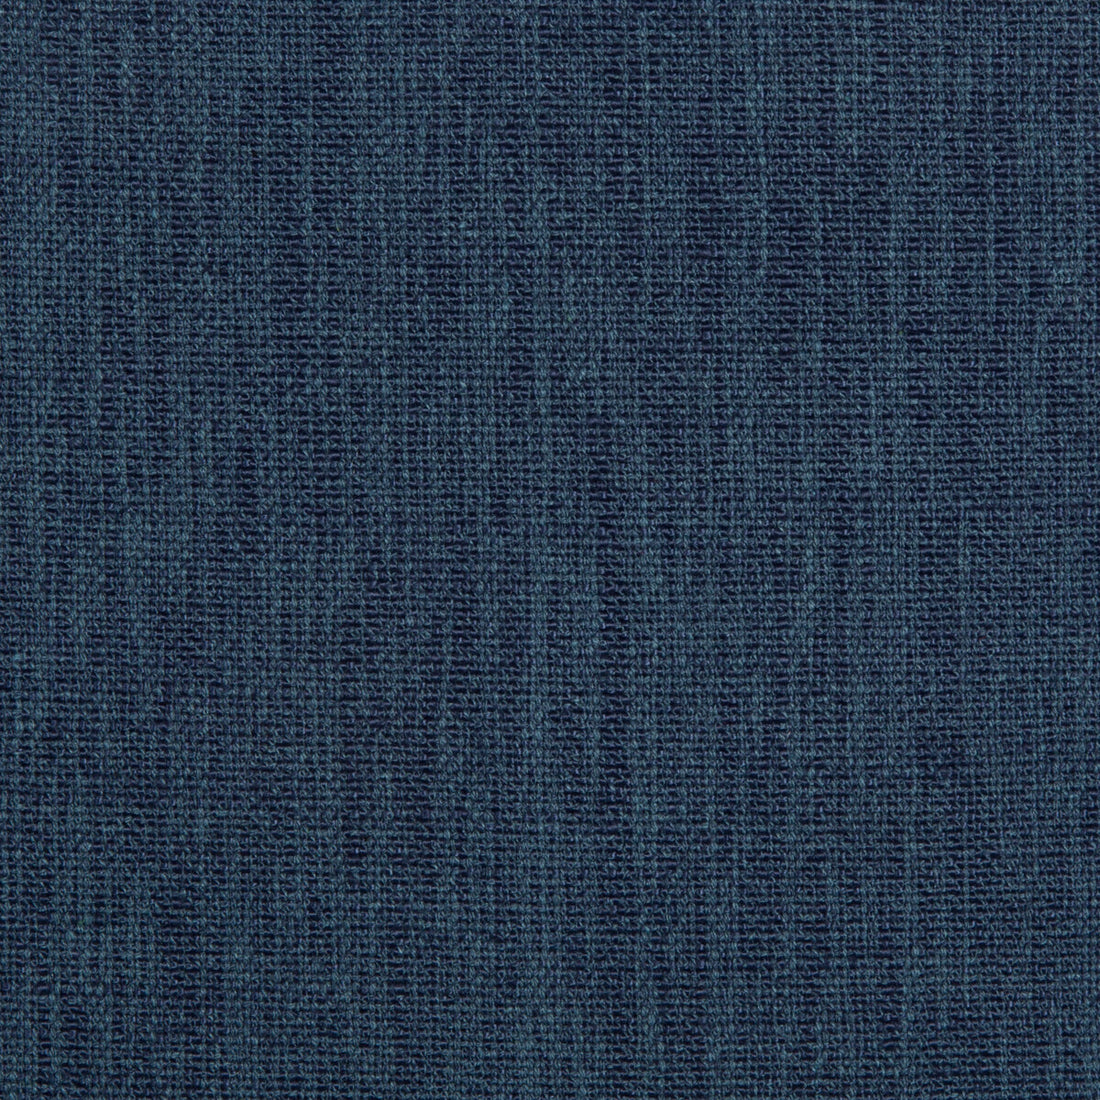 Kravet Smart fabric in 35226-50 color - pattern 35226.50.0 - by Kravet Smart in the Performance Kravetarmor collection